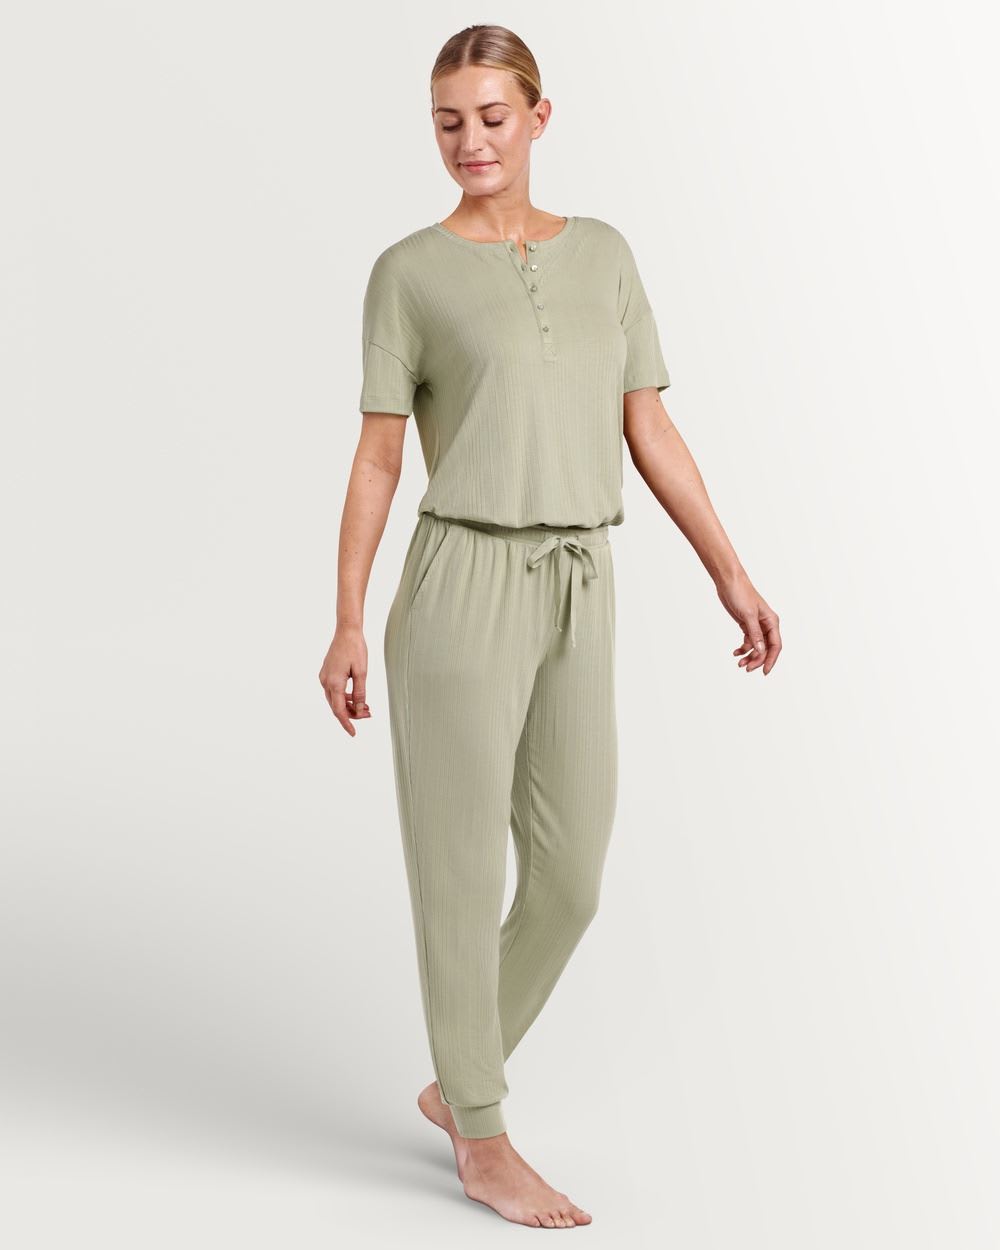 The Ribbed Desert Sage Pajama Set